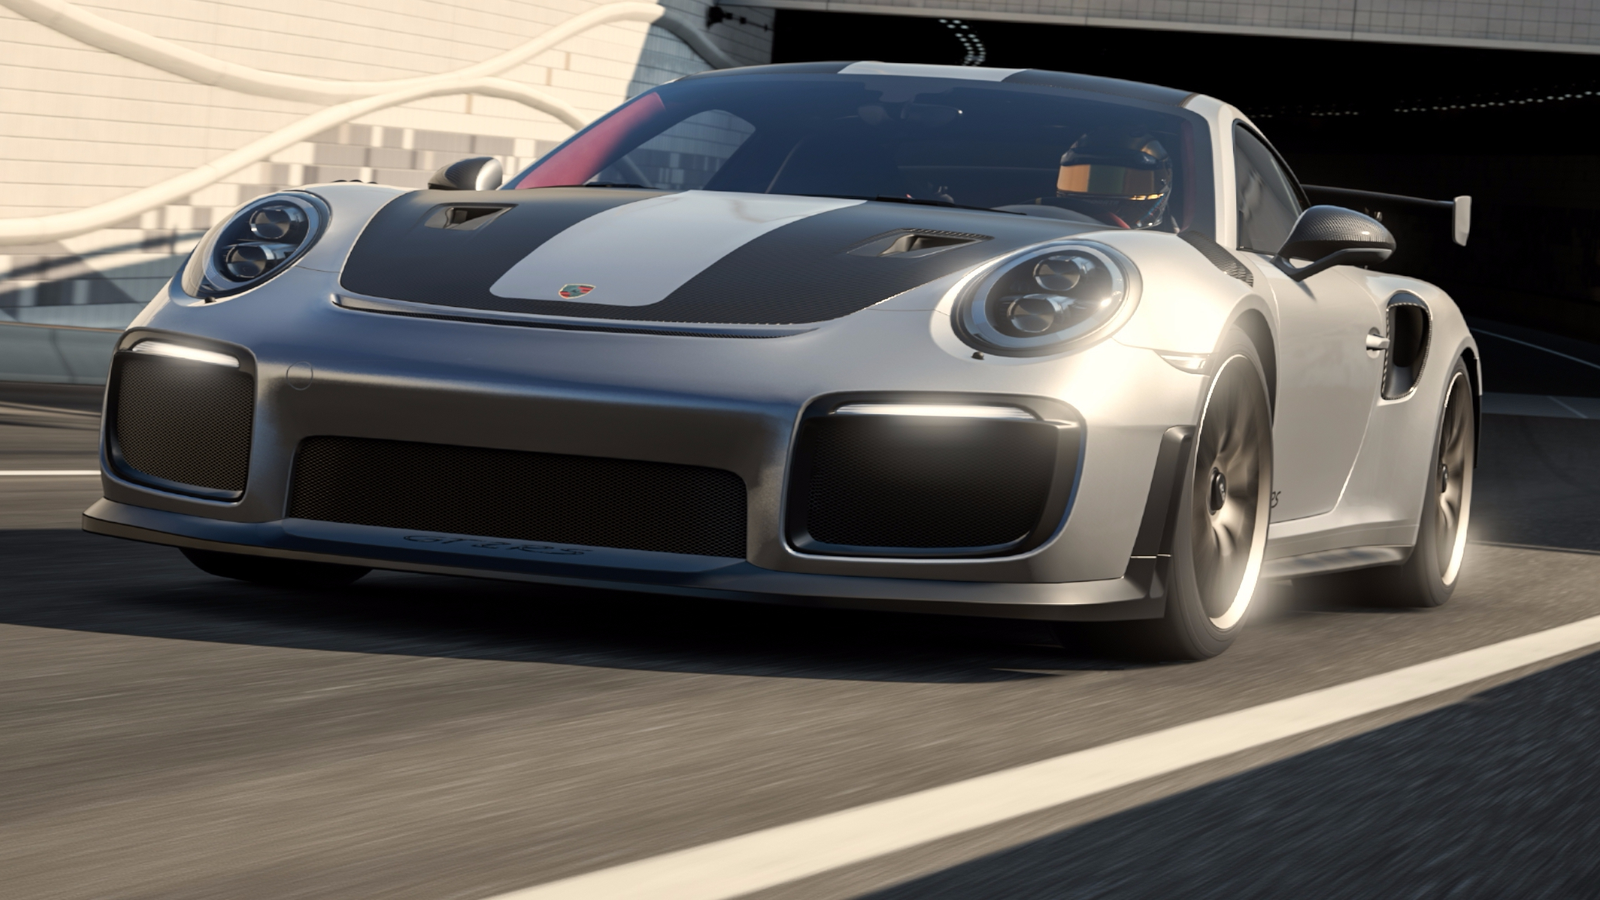 Tech Analysis: Gran Turismo Sport vs Forza Motorsport 7